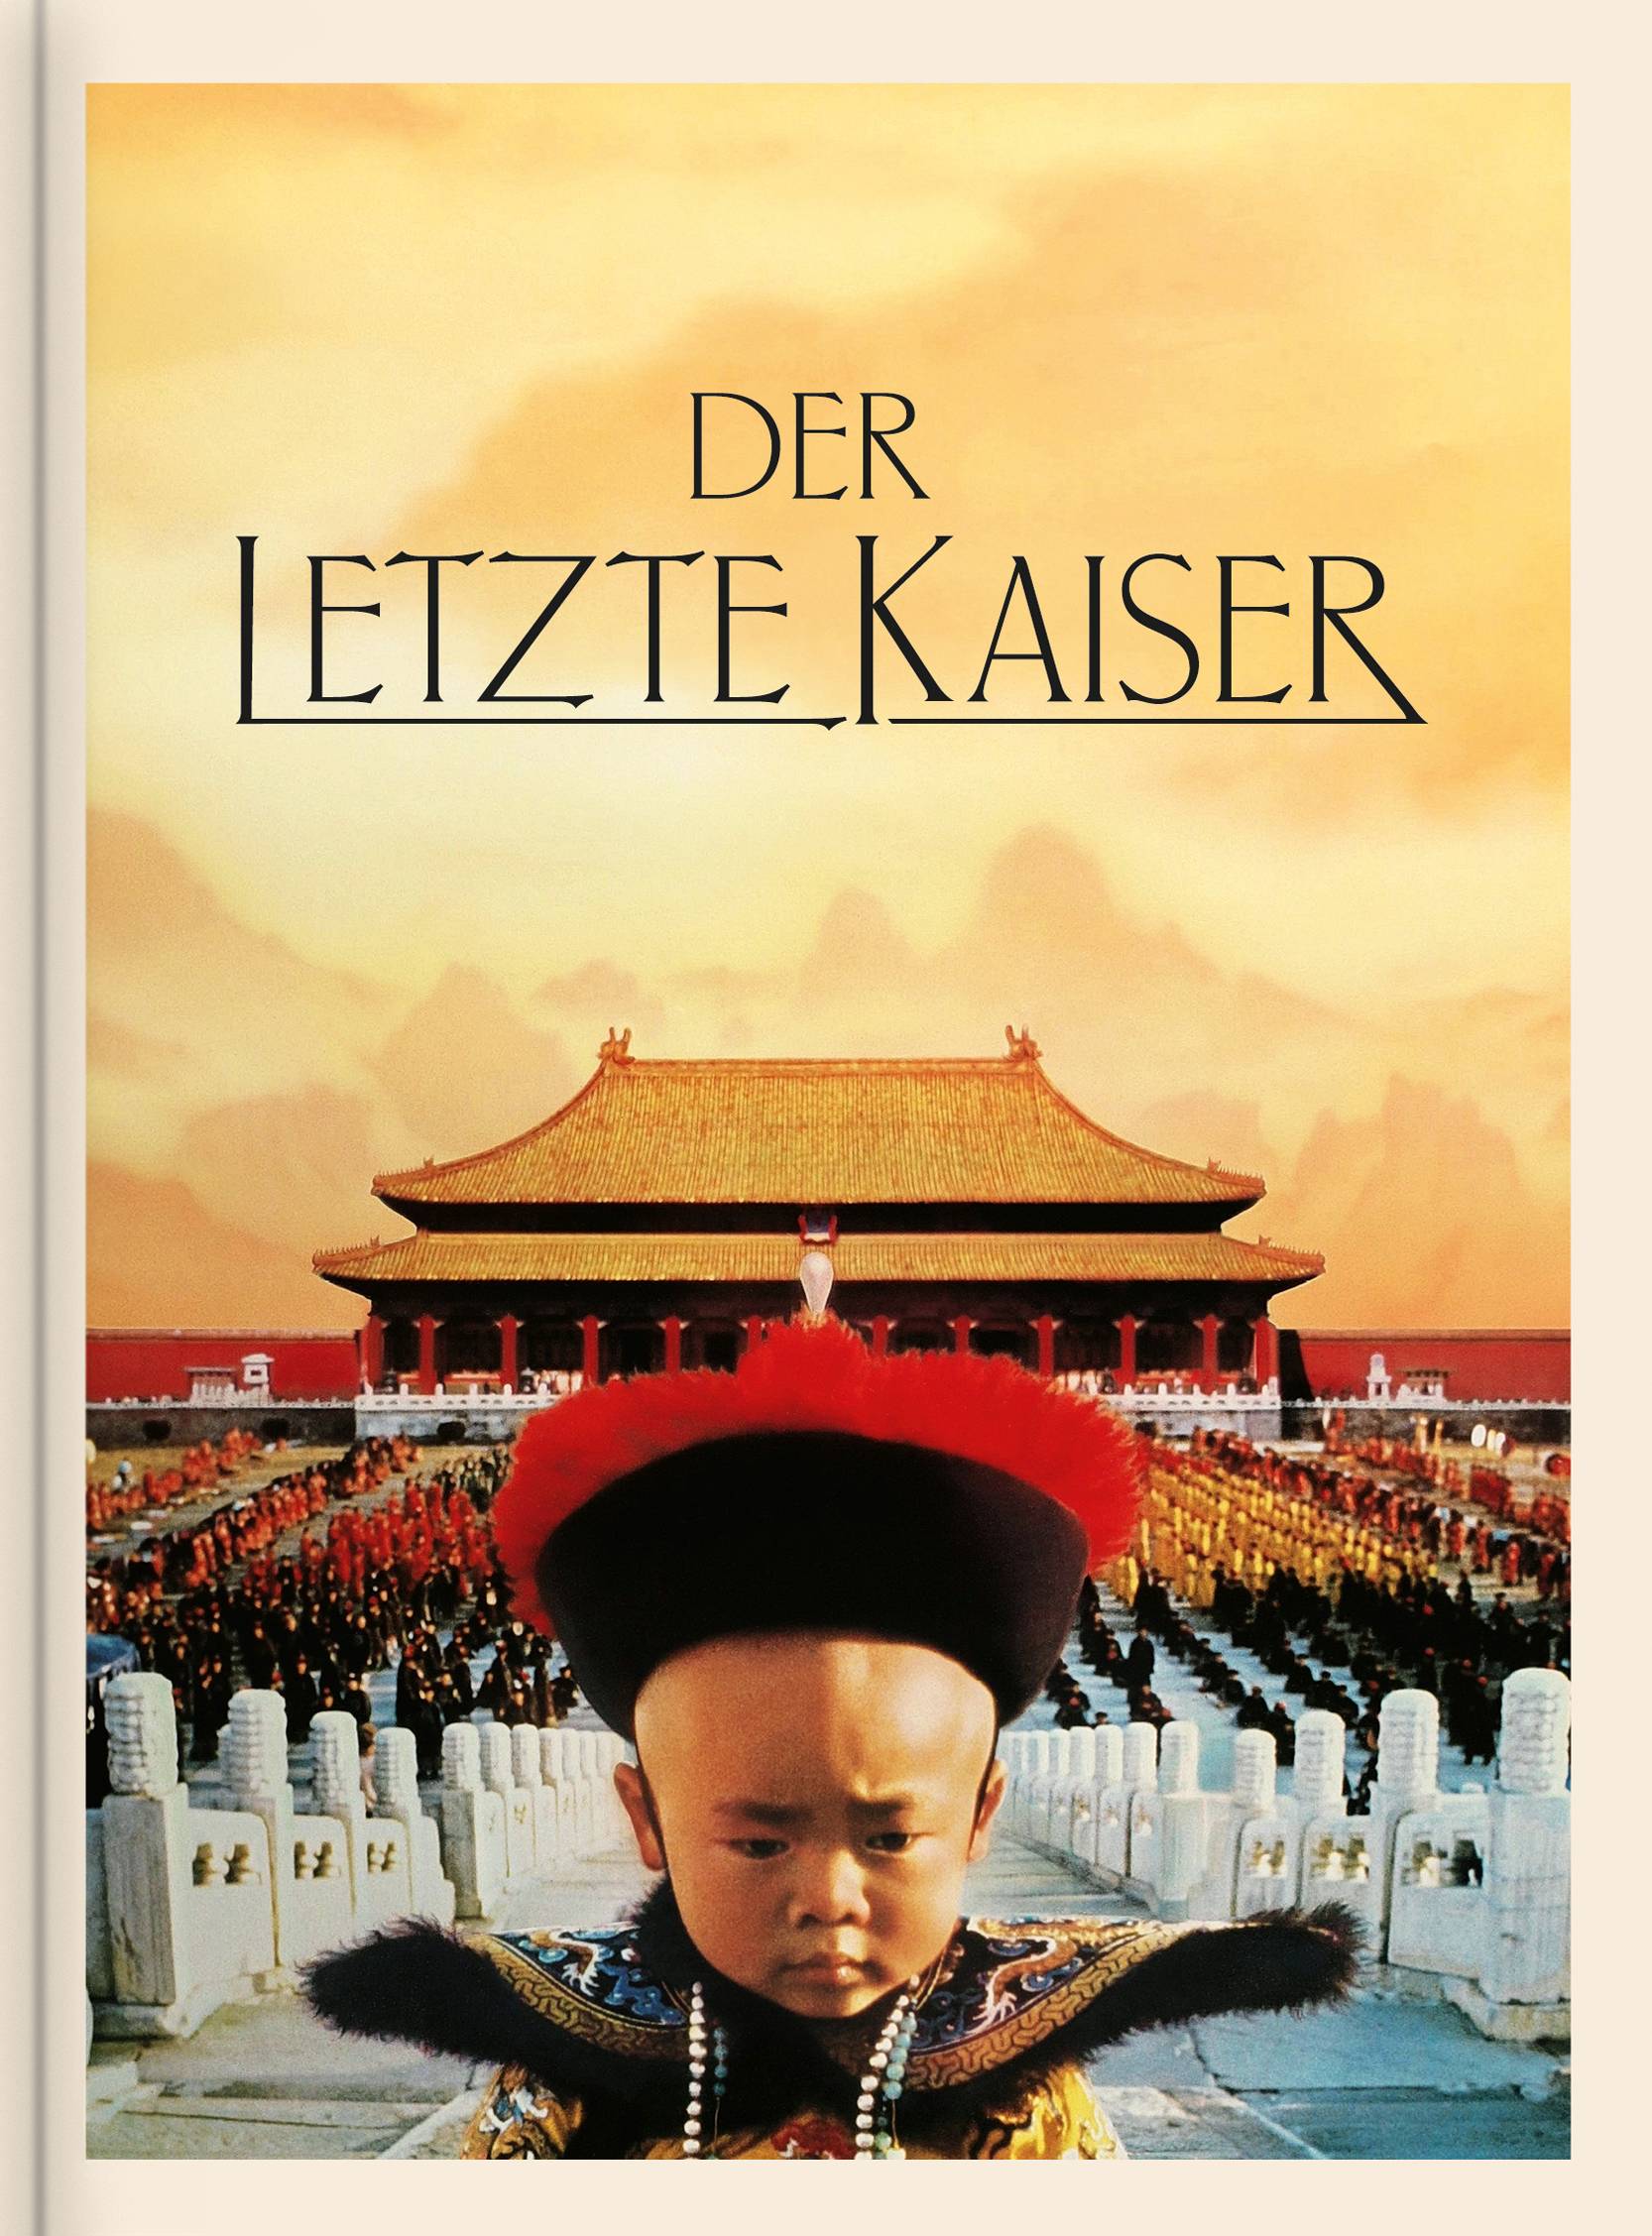 Der letzte Kaiser | Limitiertes Mediabook (4K Ultra HD Blu-ray + 3 Blu-rays) Cover B (500 Stück)